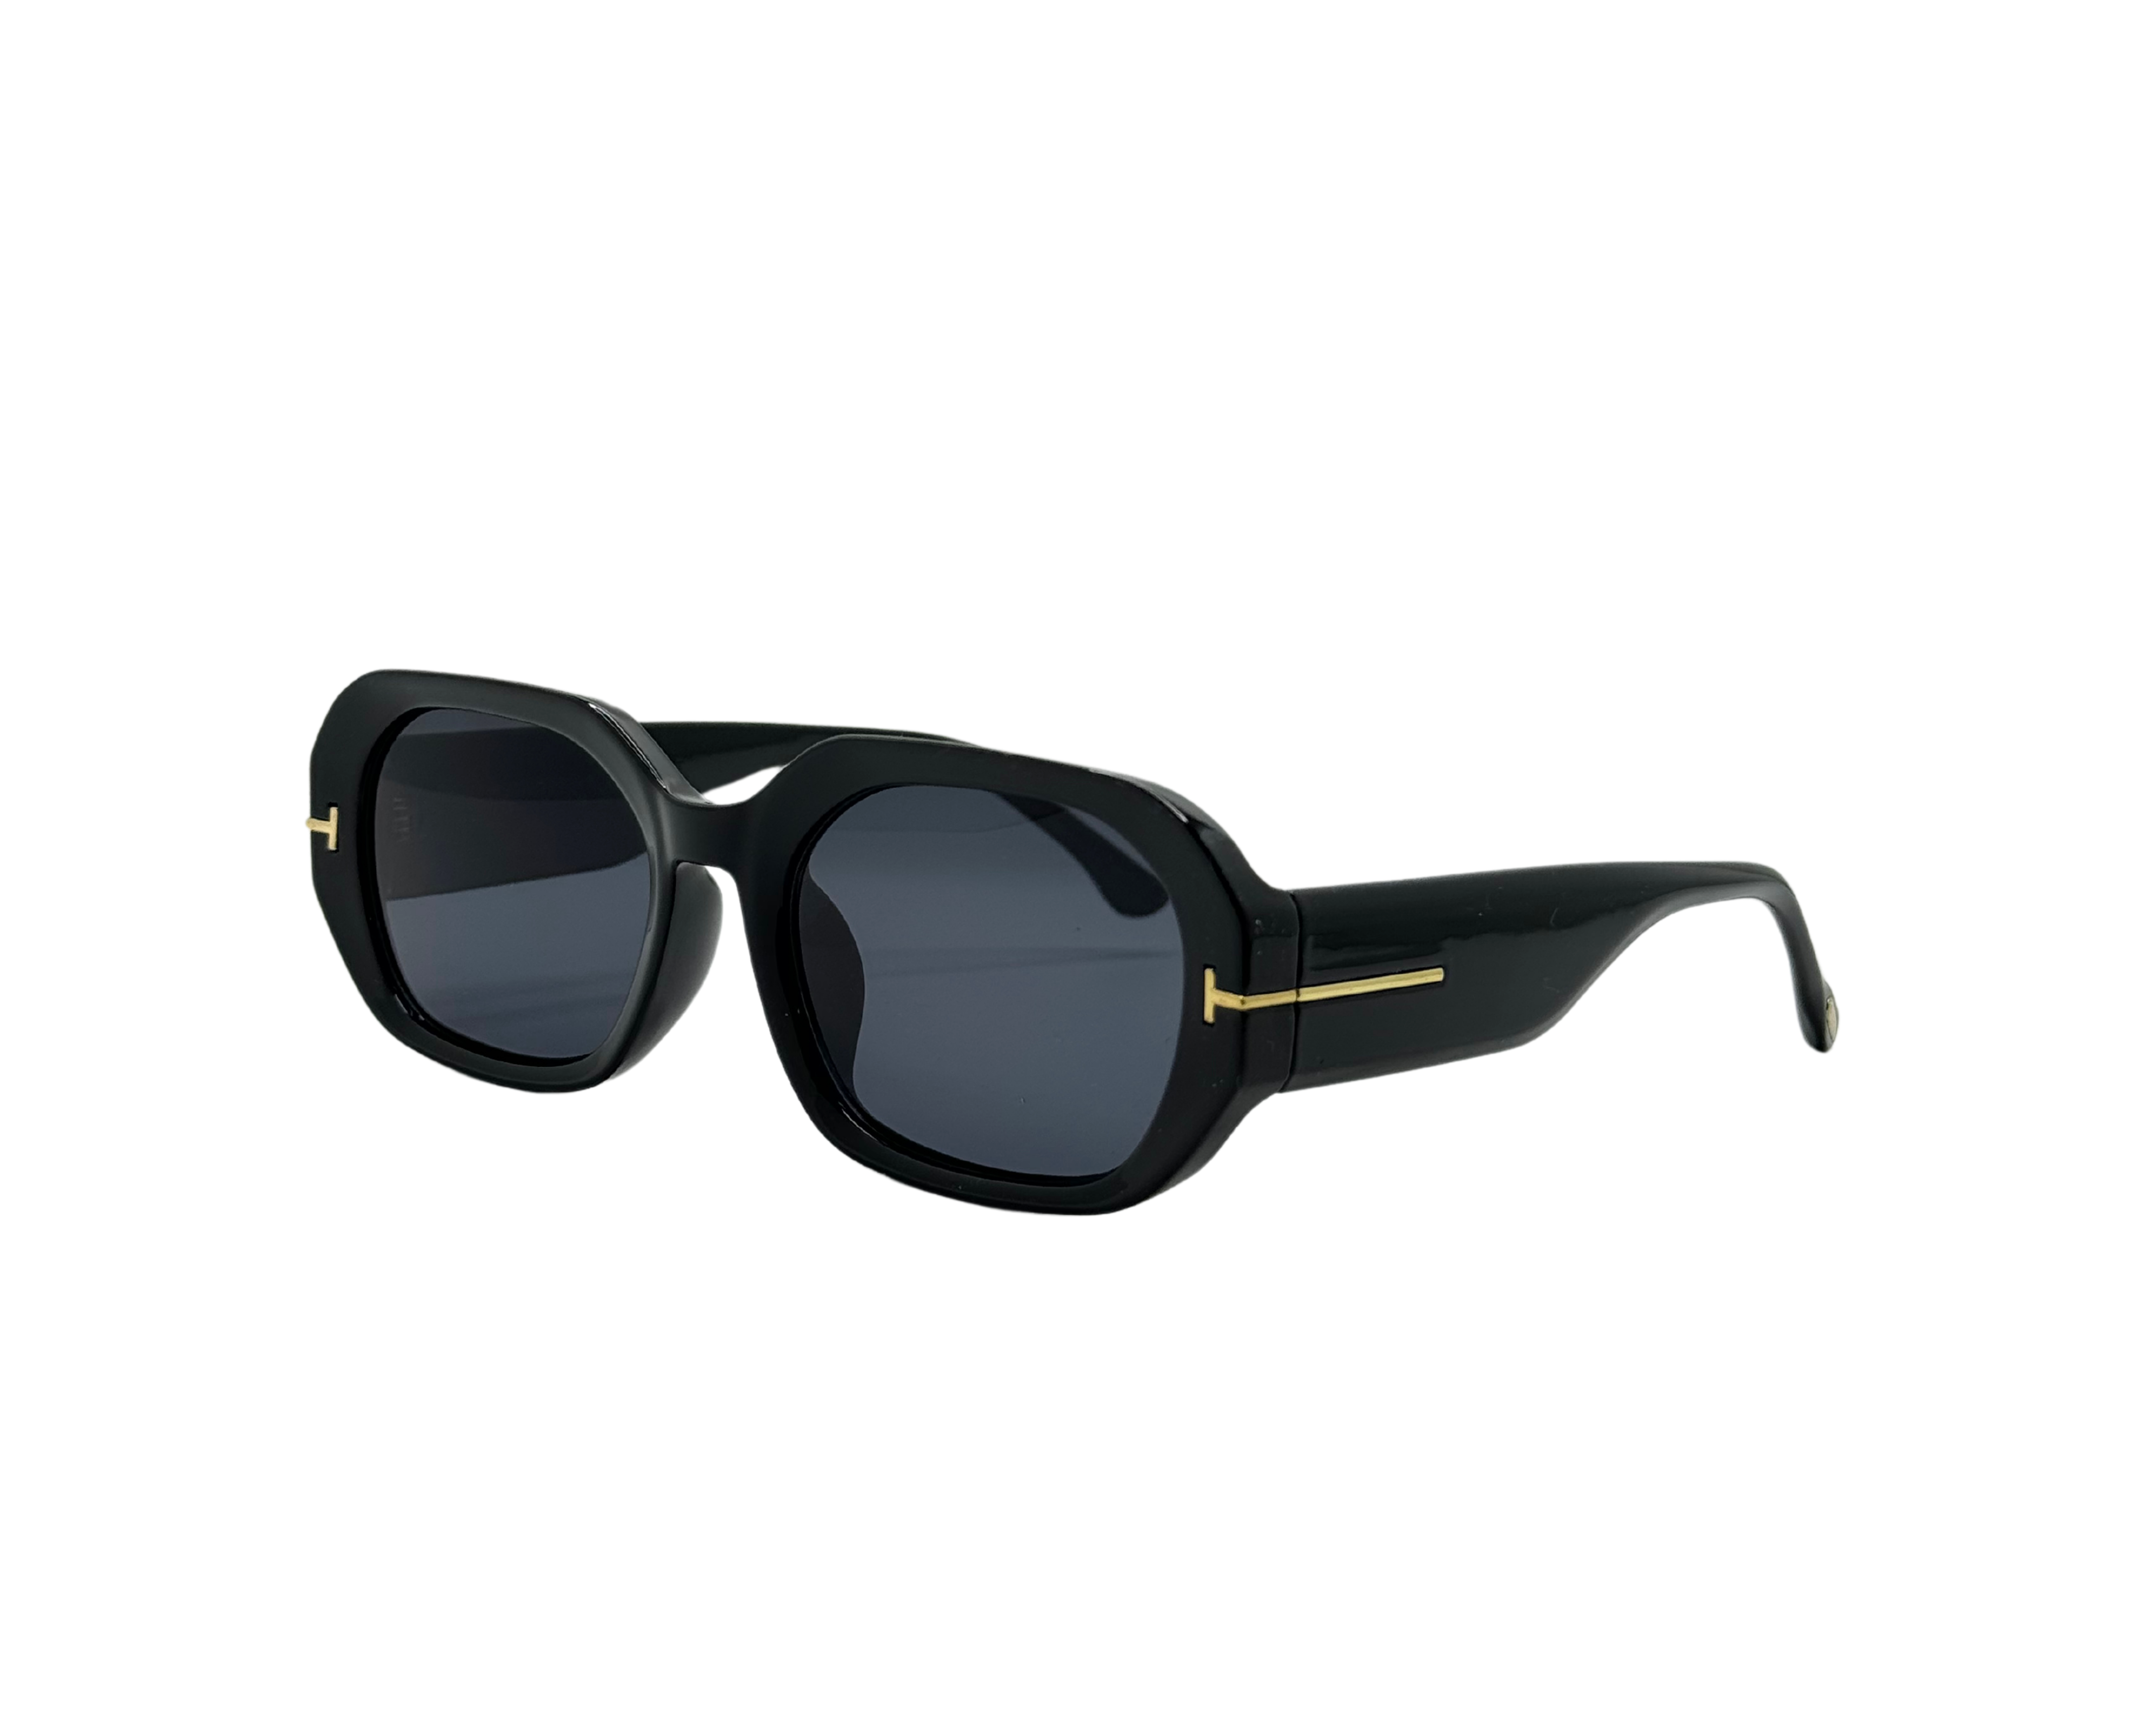 NS Deluxe - 917 - Black - Sunglasses